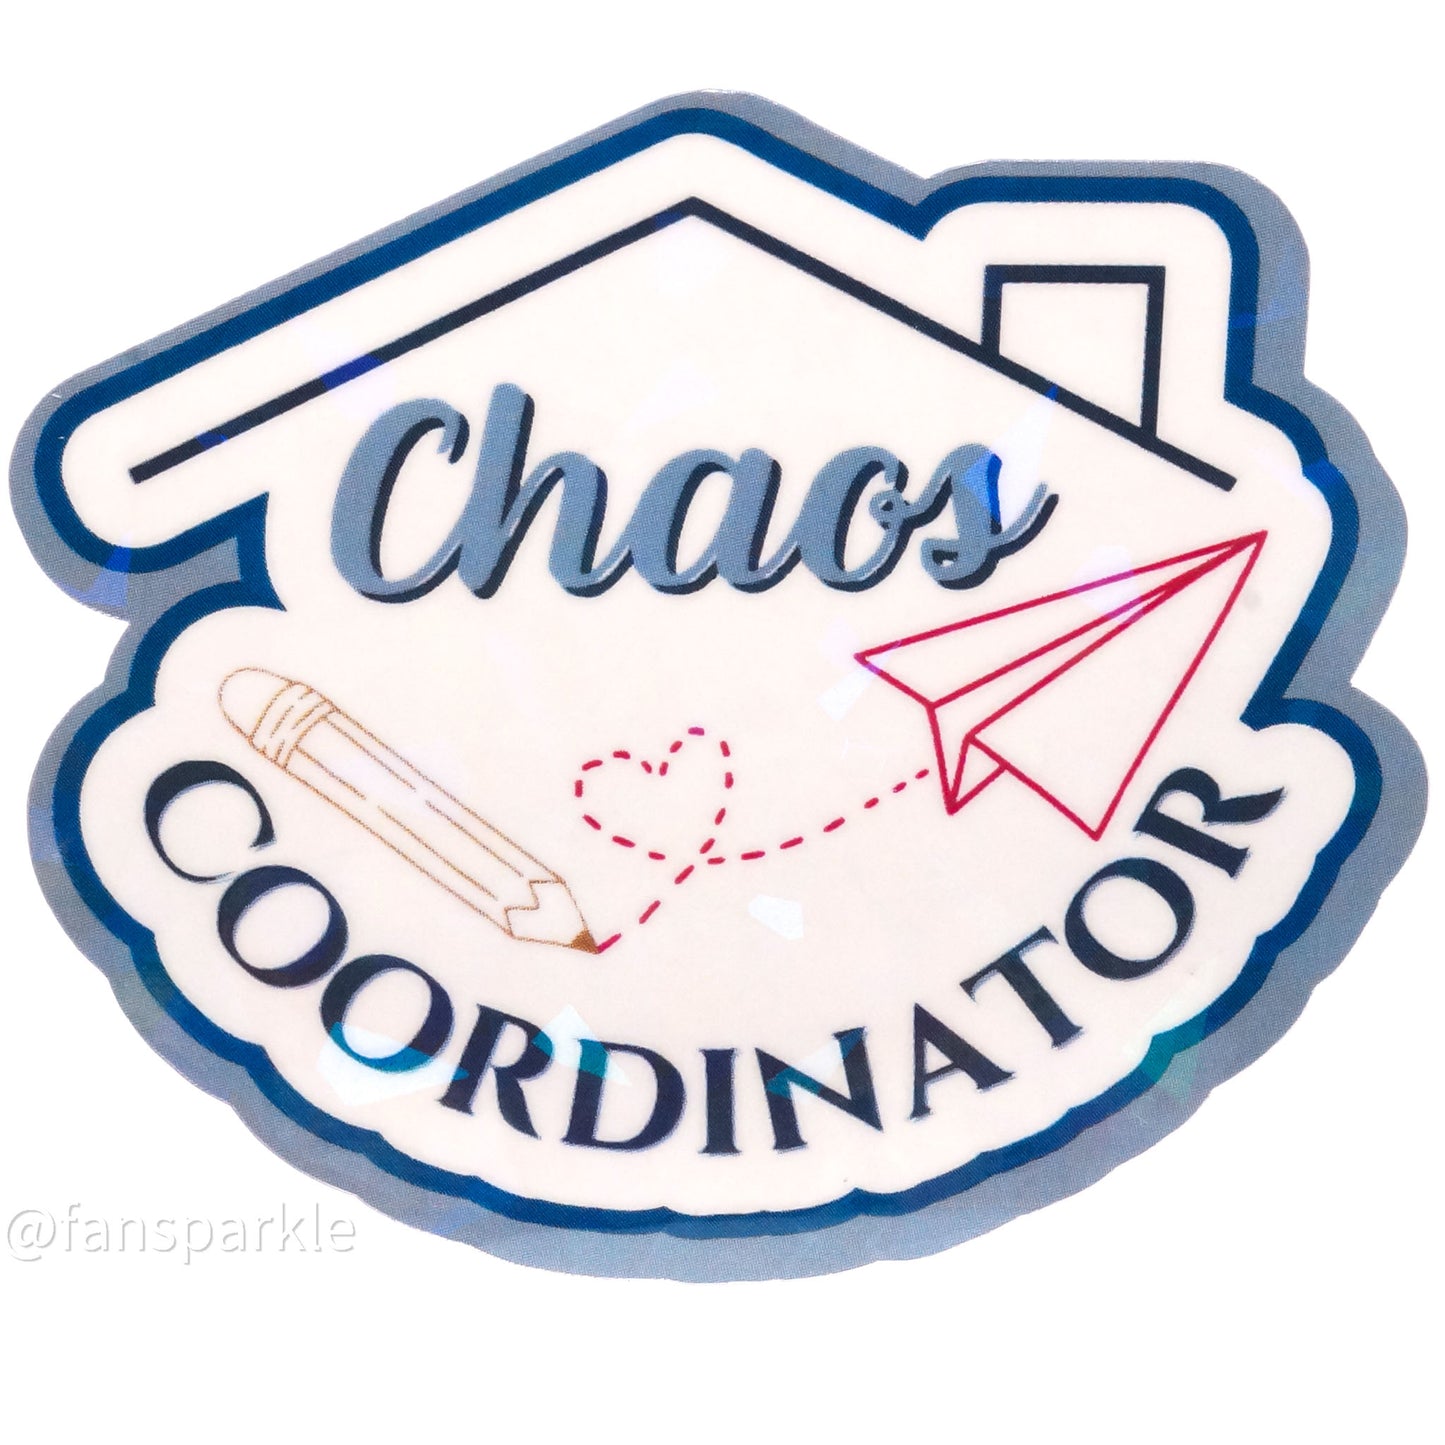 Chaos Coordinator Sticker - Fan Sparkle